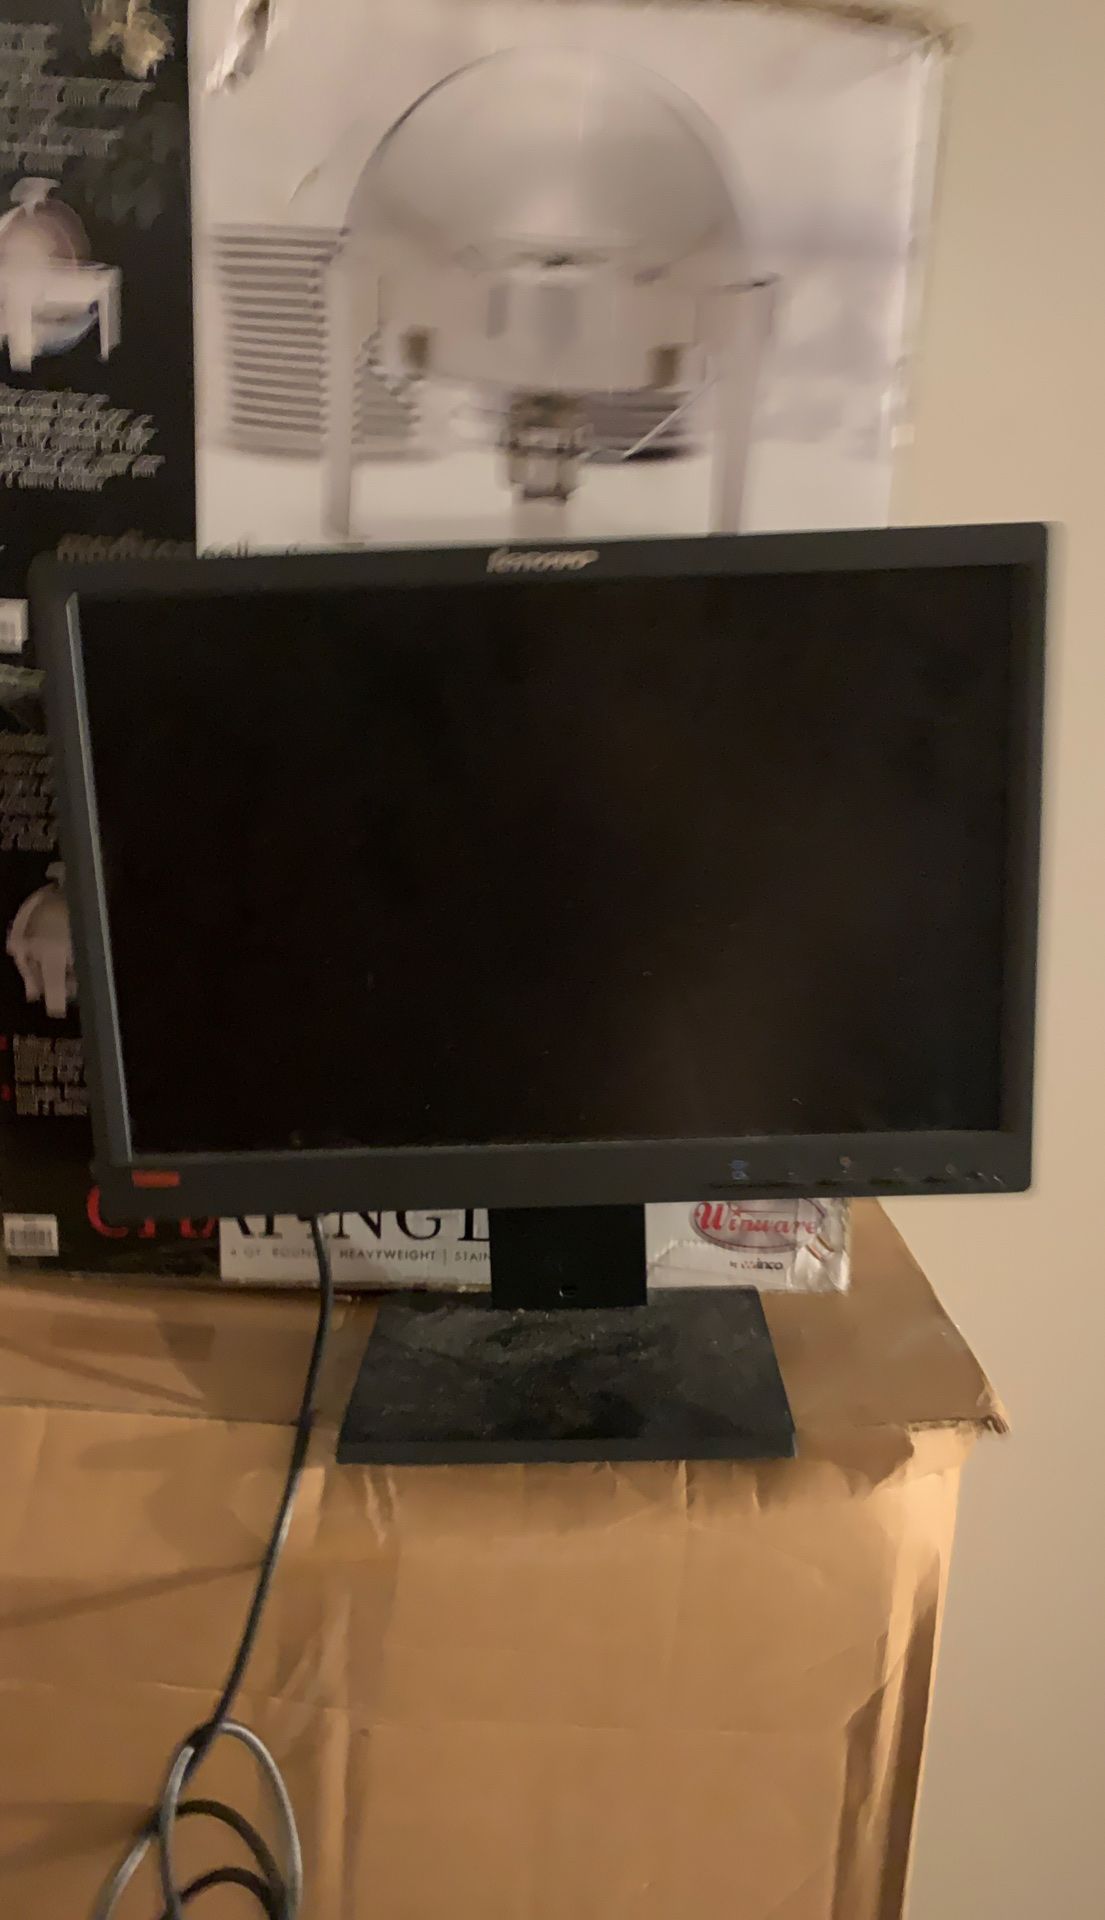 17 inch computer monitor